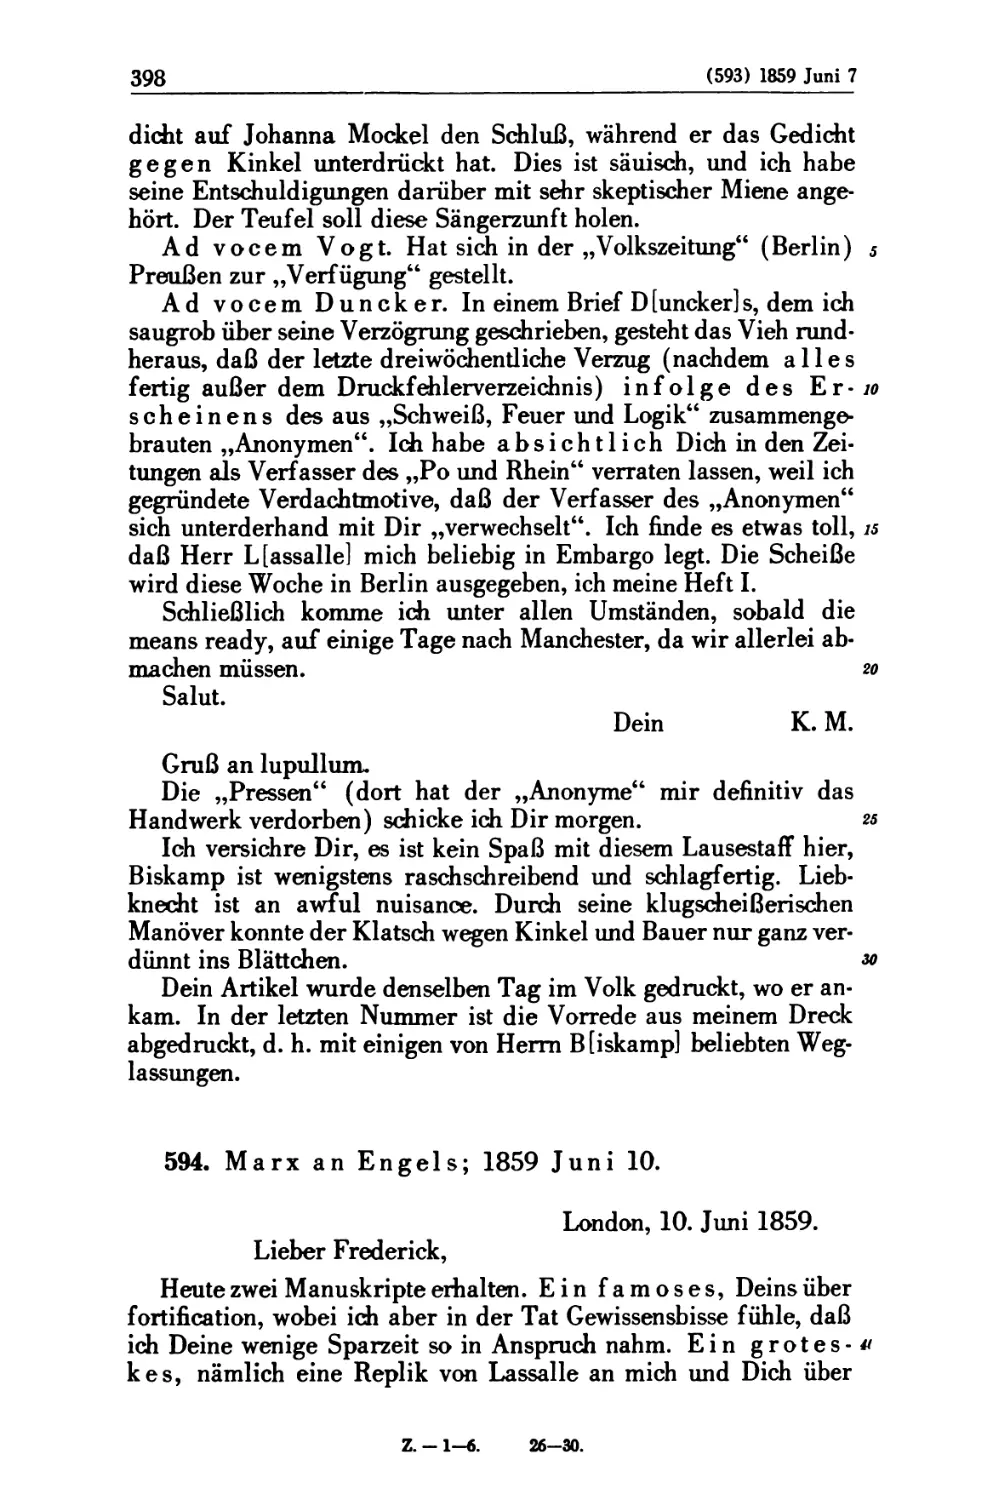 594. Marx an Engels; 1859 Juni 10